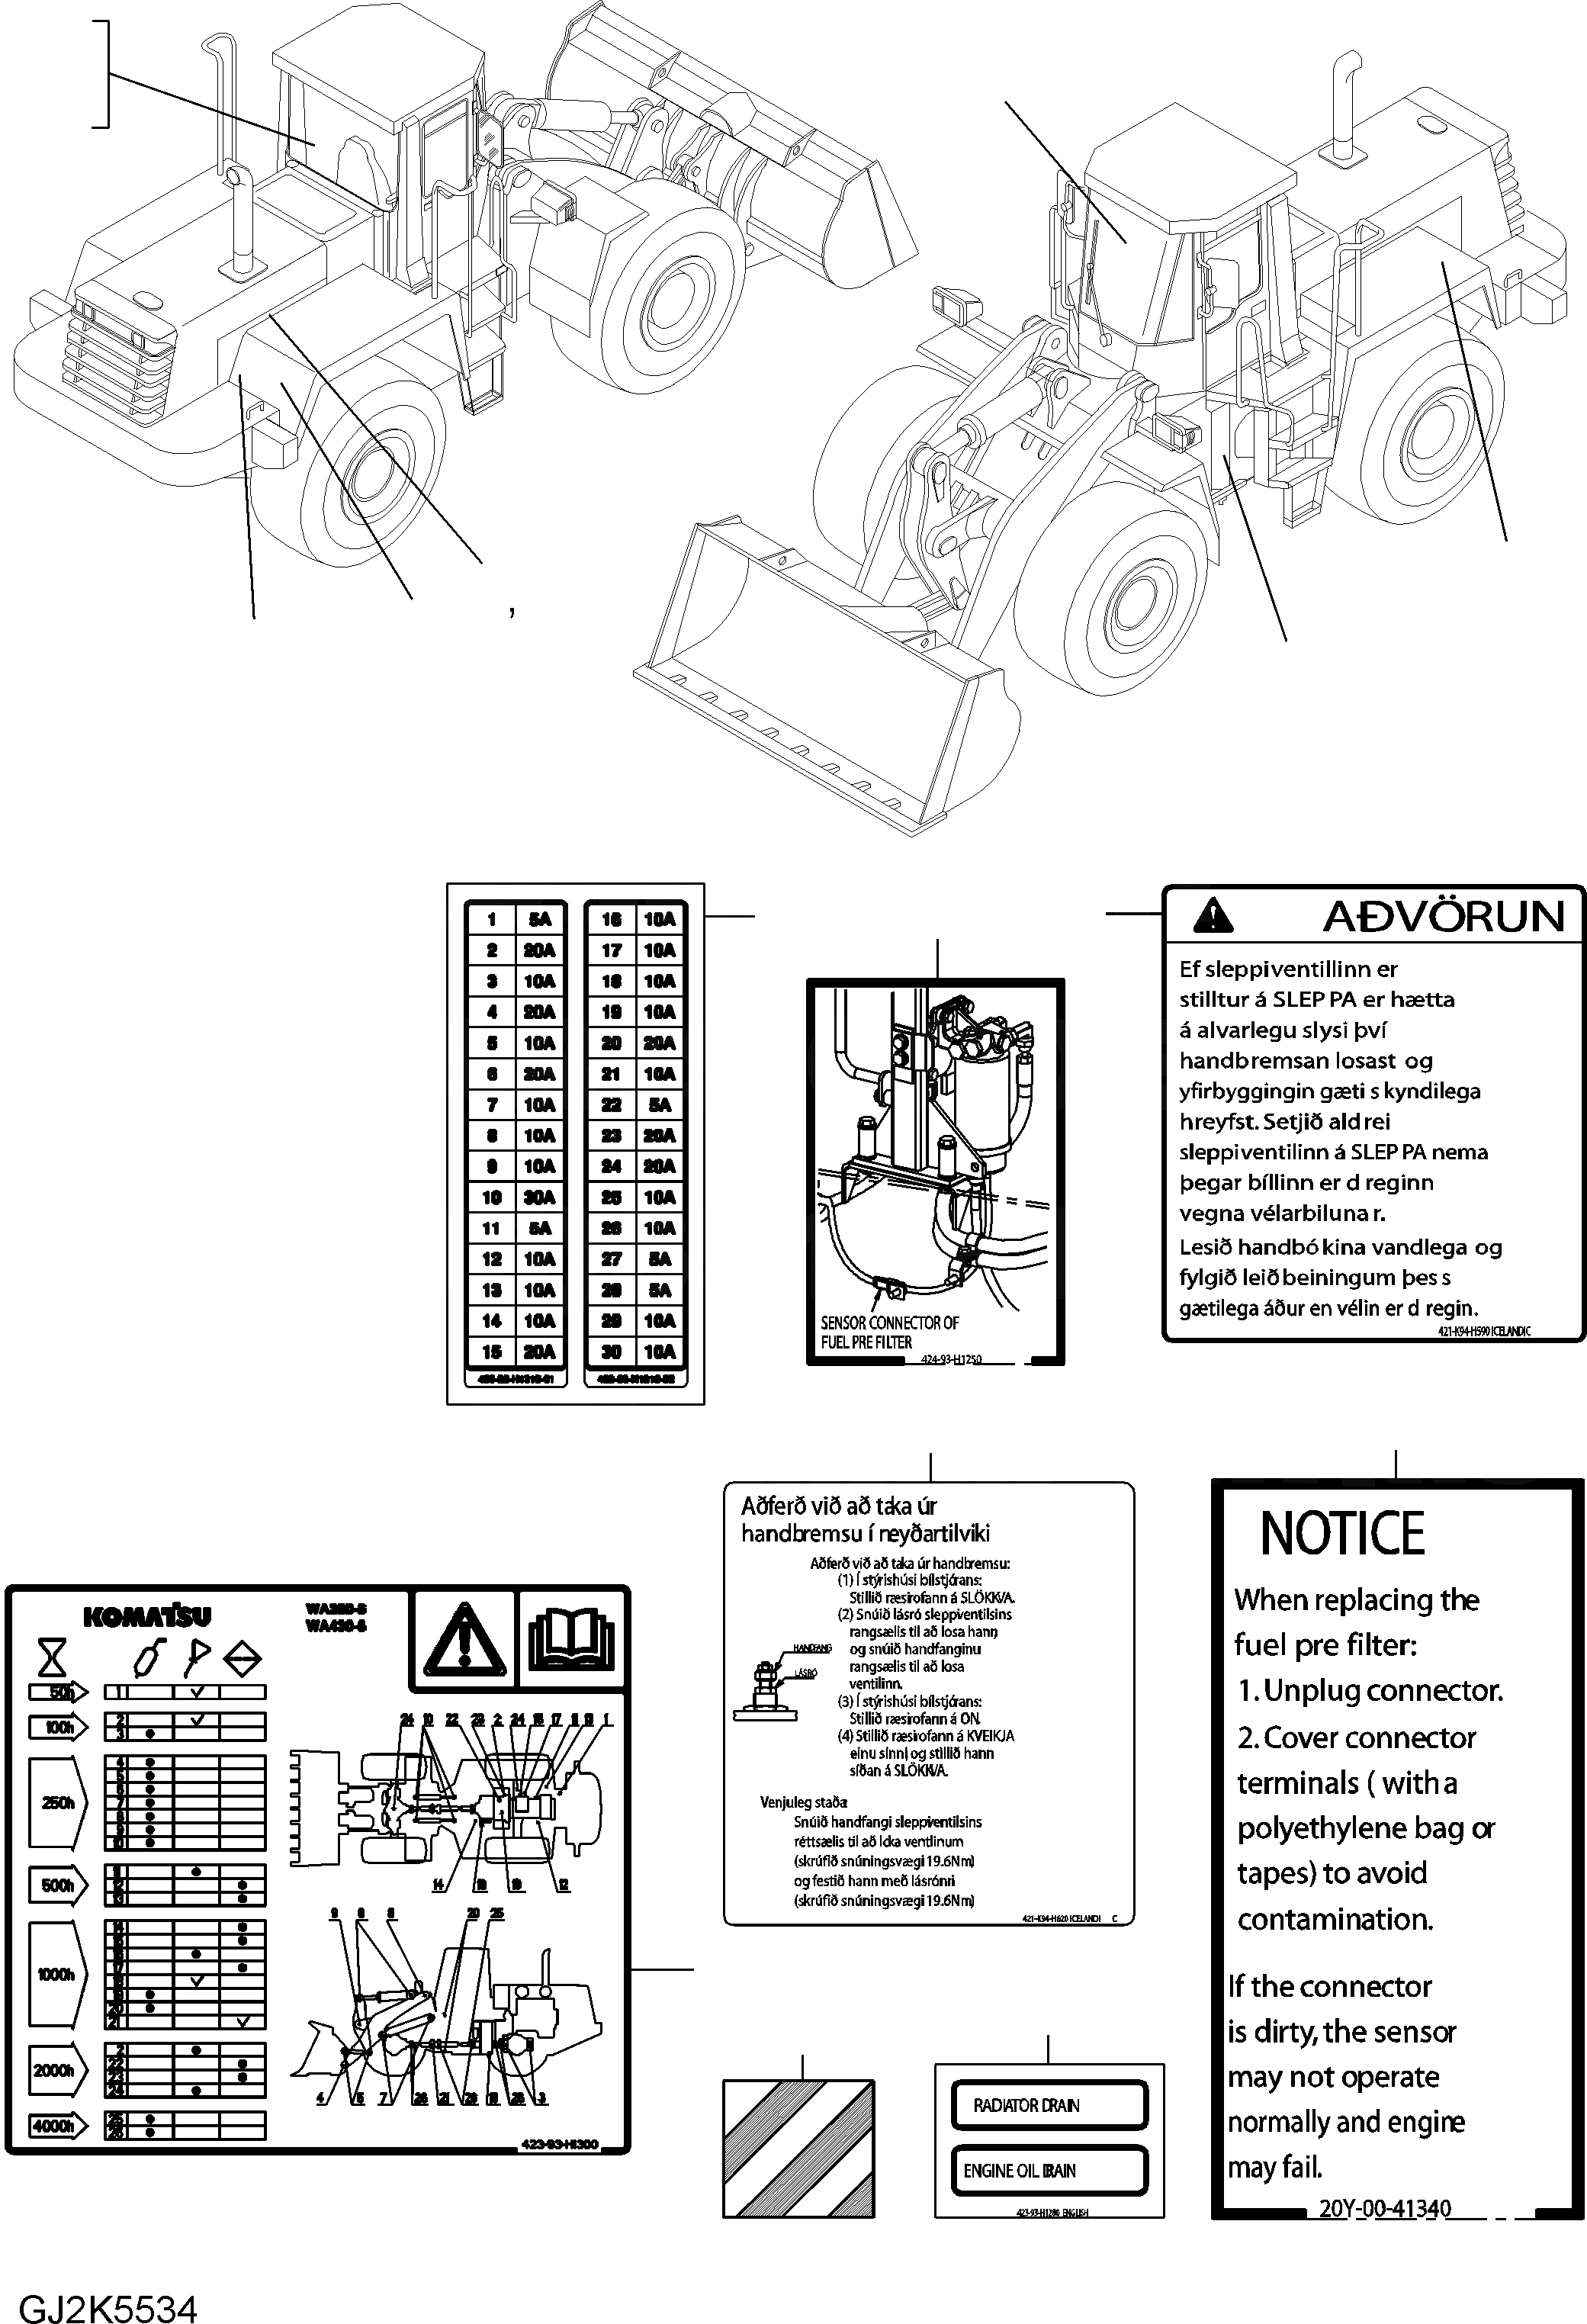 Схема запчастей Komatsu WA430-6E0 - ТАБЛИЧКИ (ICELANDIC) U МАРКИРОВКА